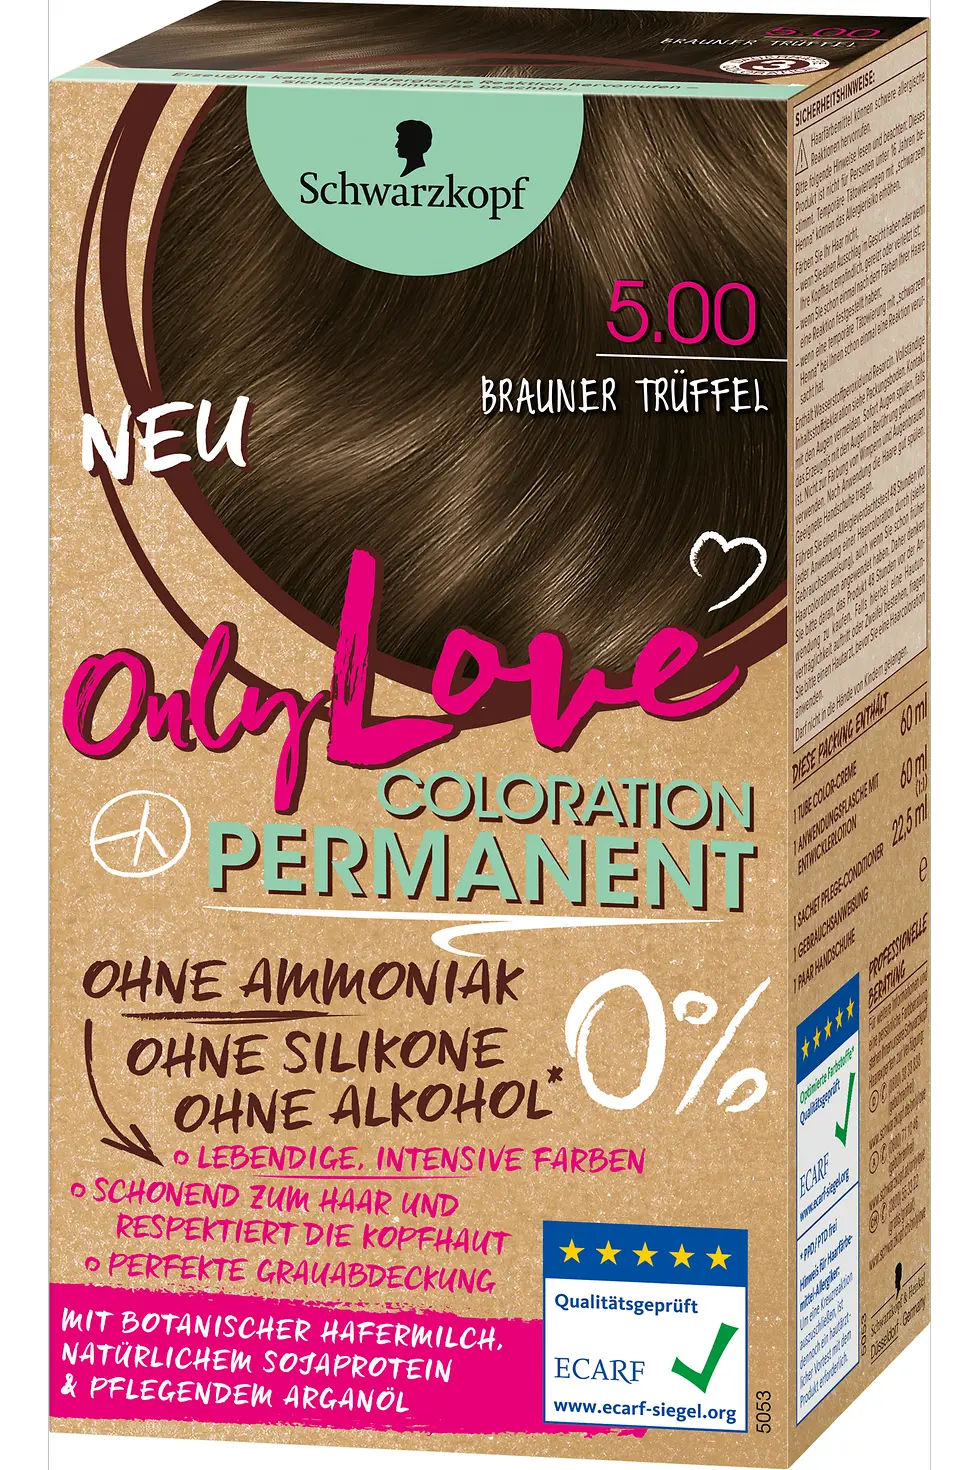 Only Love Brauner Trüffel 5.00